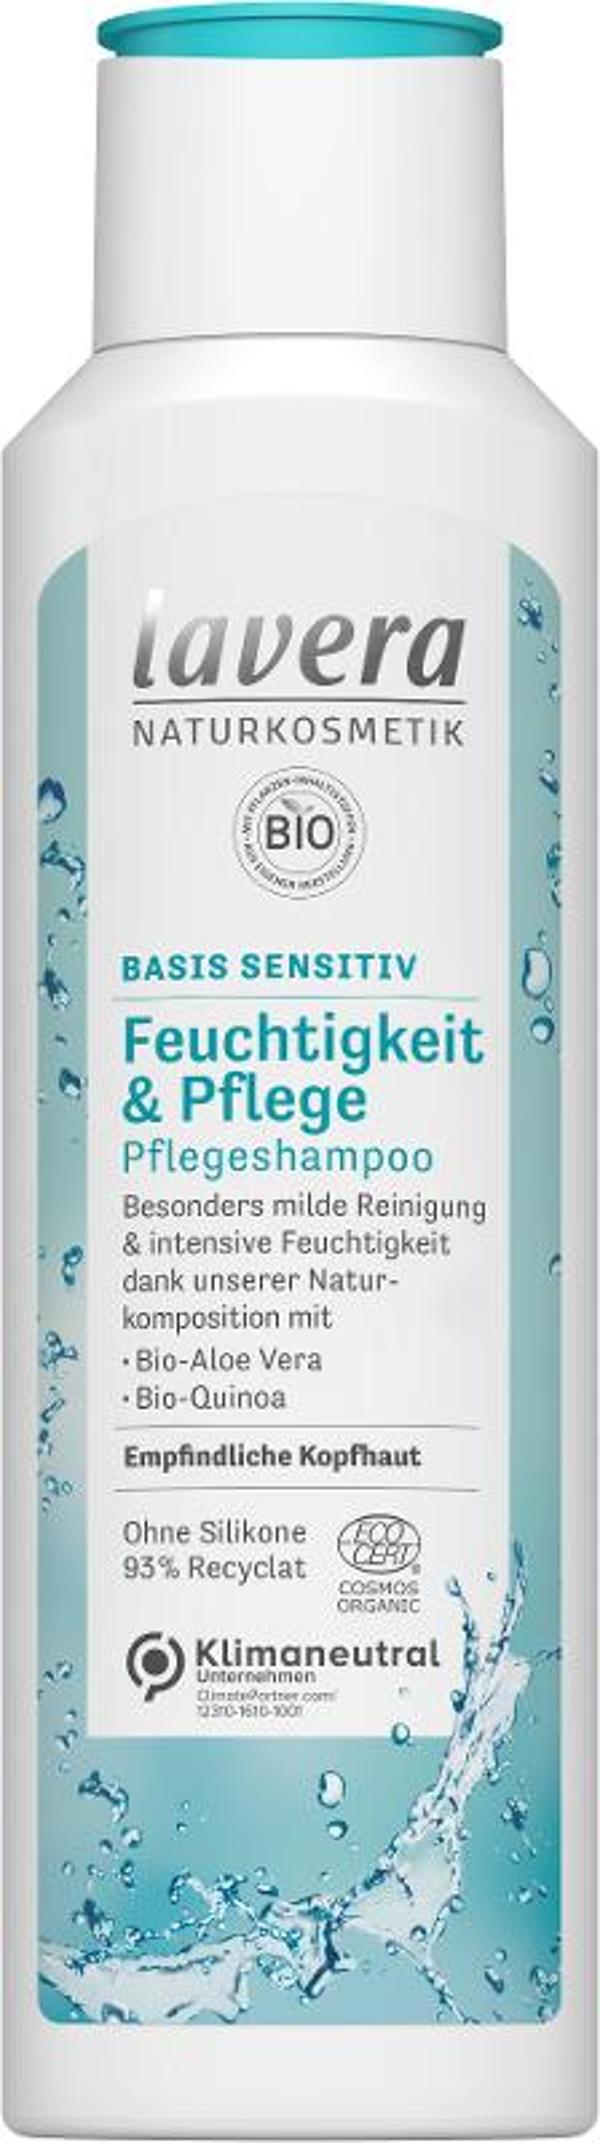 Produktfoto zu Feuchtigkeit & Pflegeshampoo, 250 ml